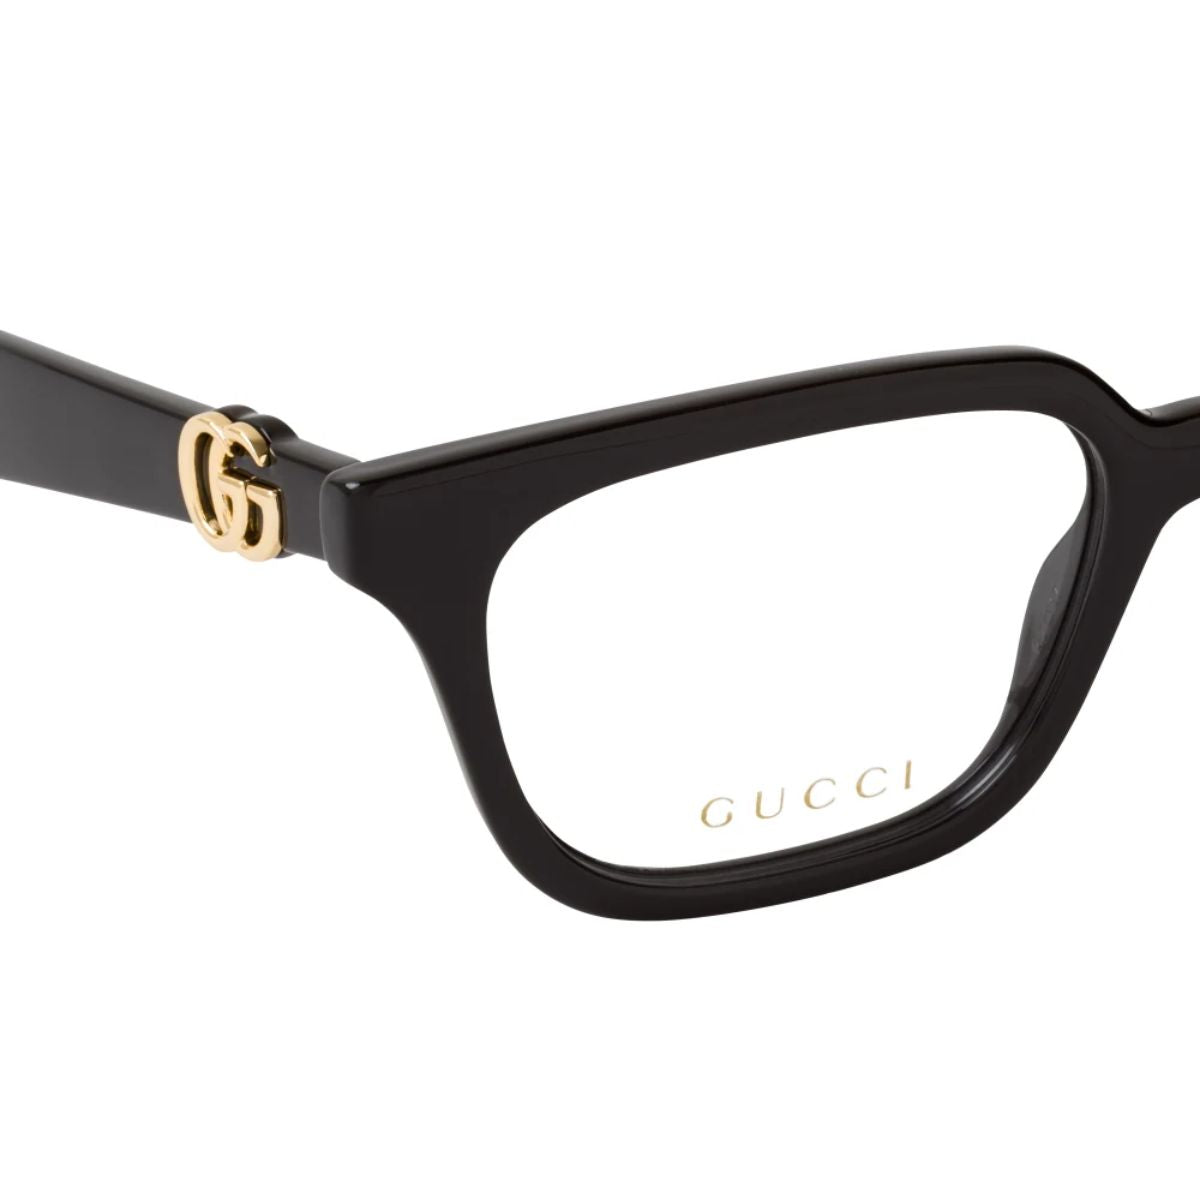 "Elegant Gucci Eyeglass Frames for Women - Optorium's Store"